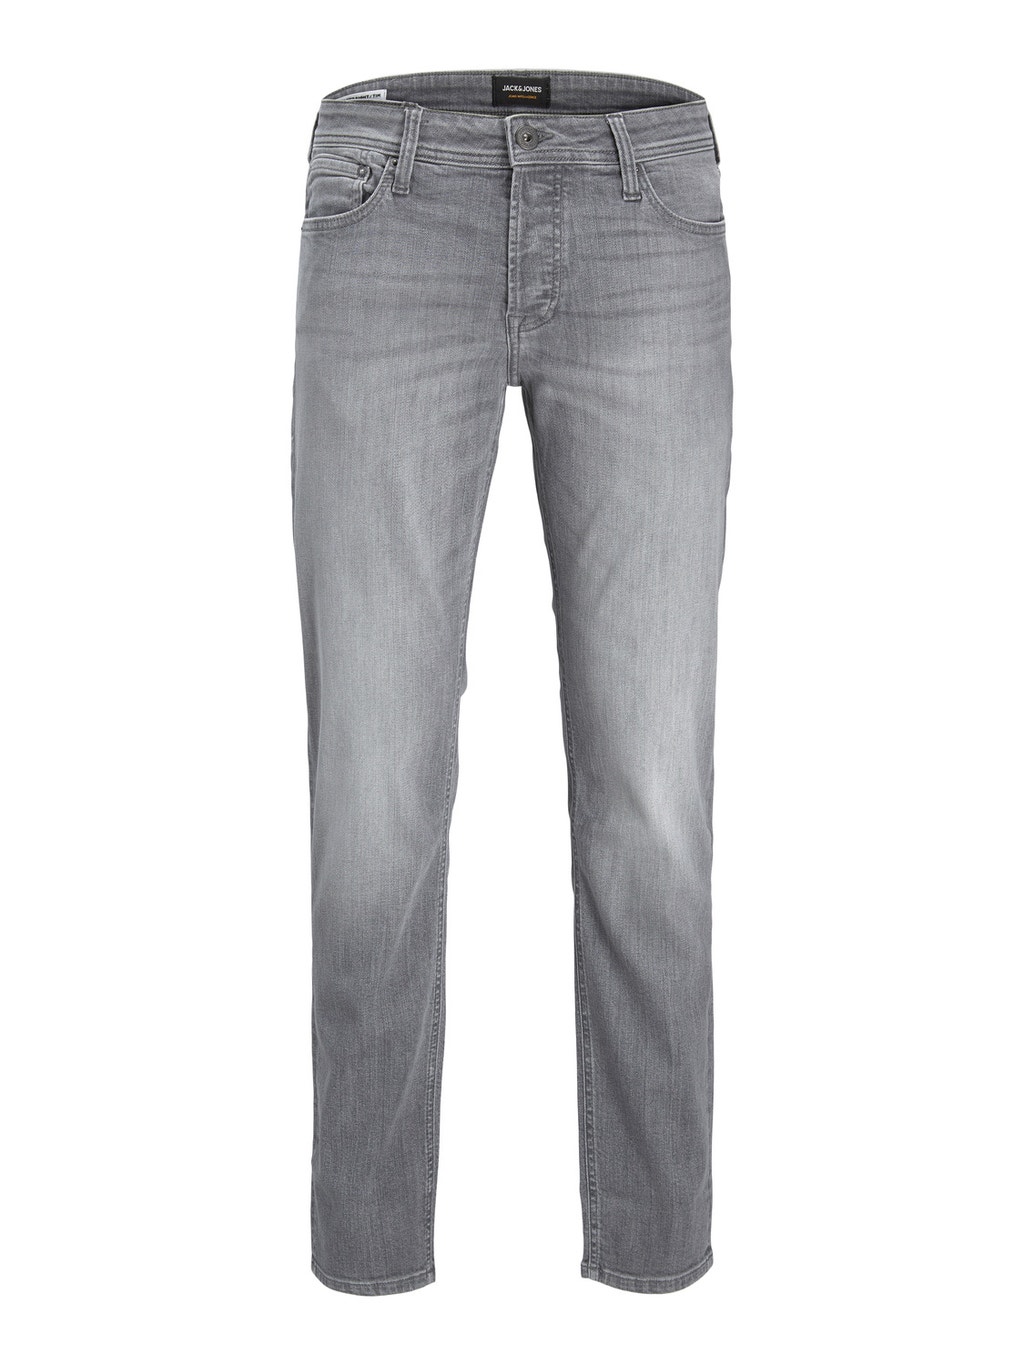 Regelen Mangel Negen Tim Original AGI 787 Slim/straight fit jeans | Medium Grey | Jack & Jones®